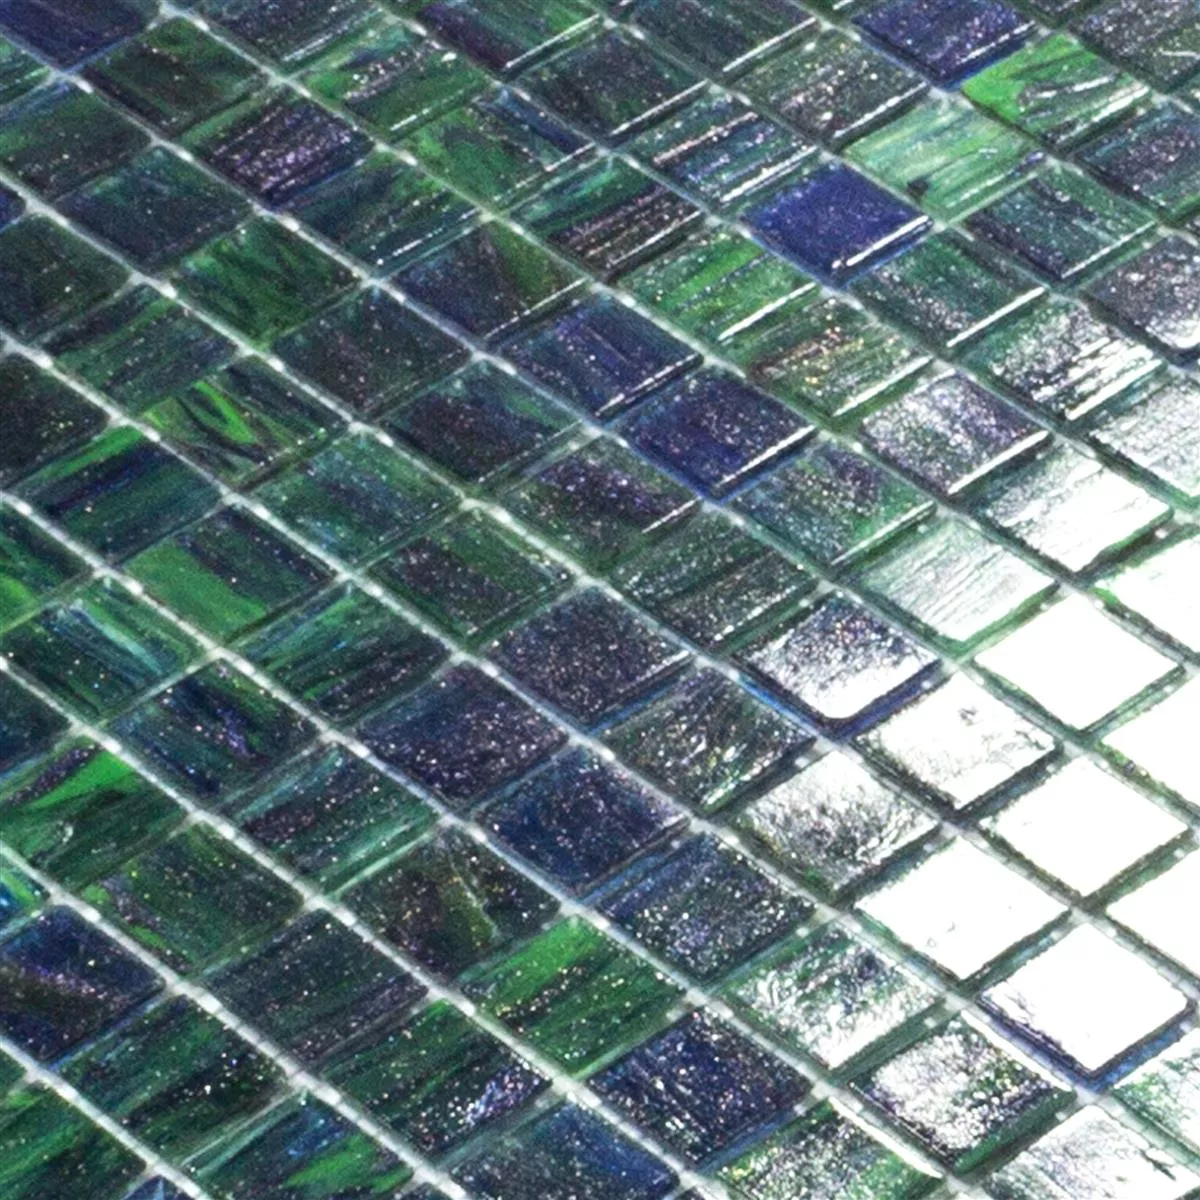 Glass Mosaic Tiles Catalina Blue Green Mix